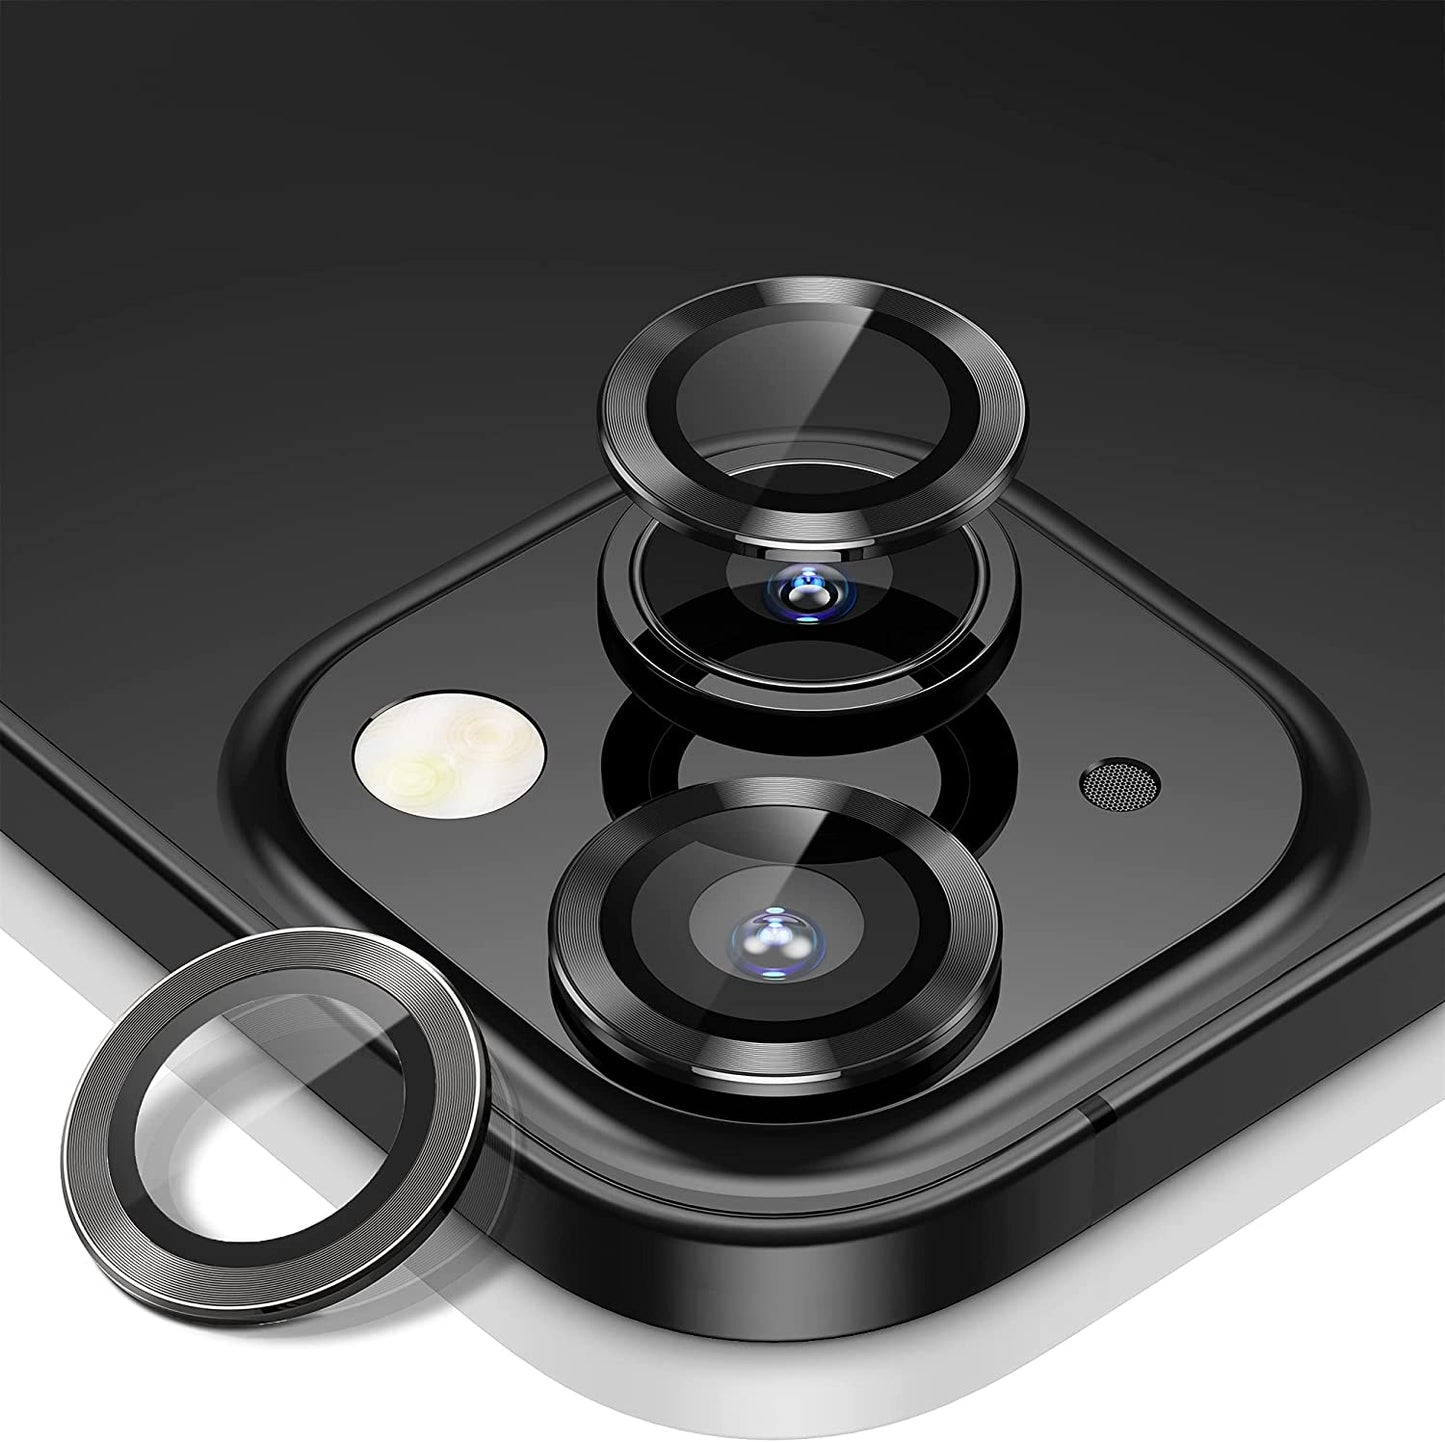 Camera Lens Protector - Iphone Models